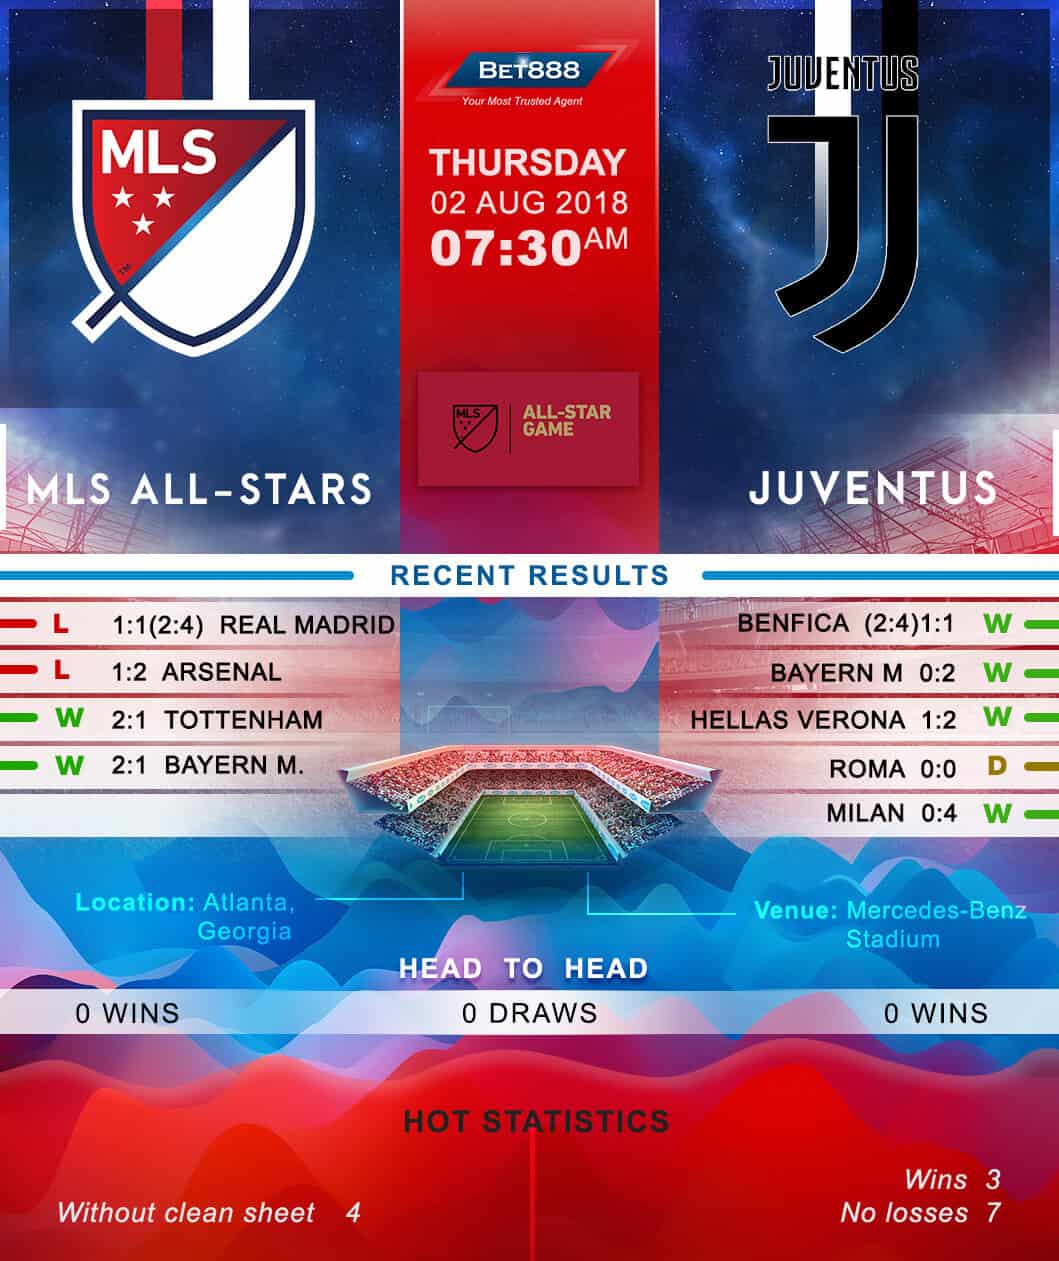 MLS All-Stars vs Juventus 02/08/18